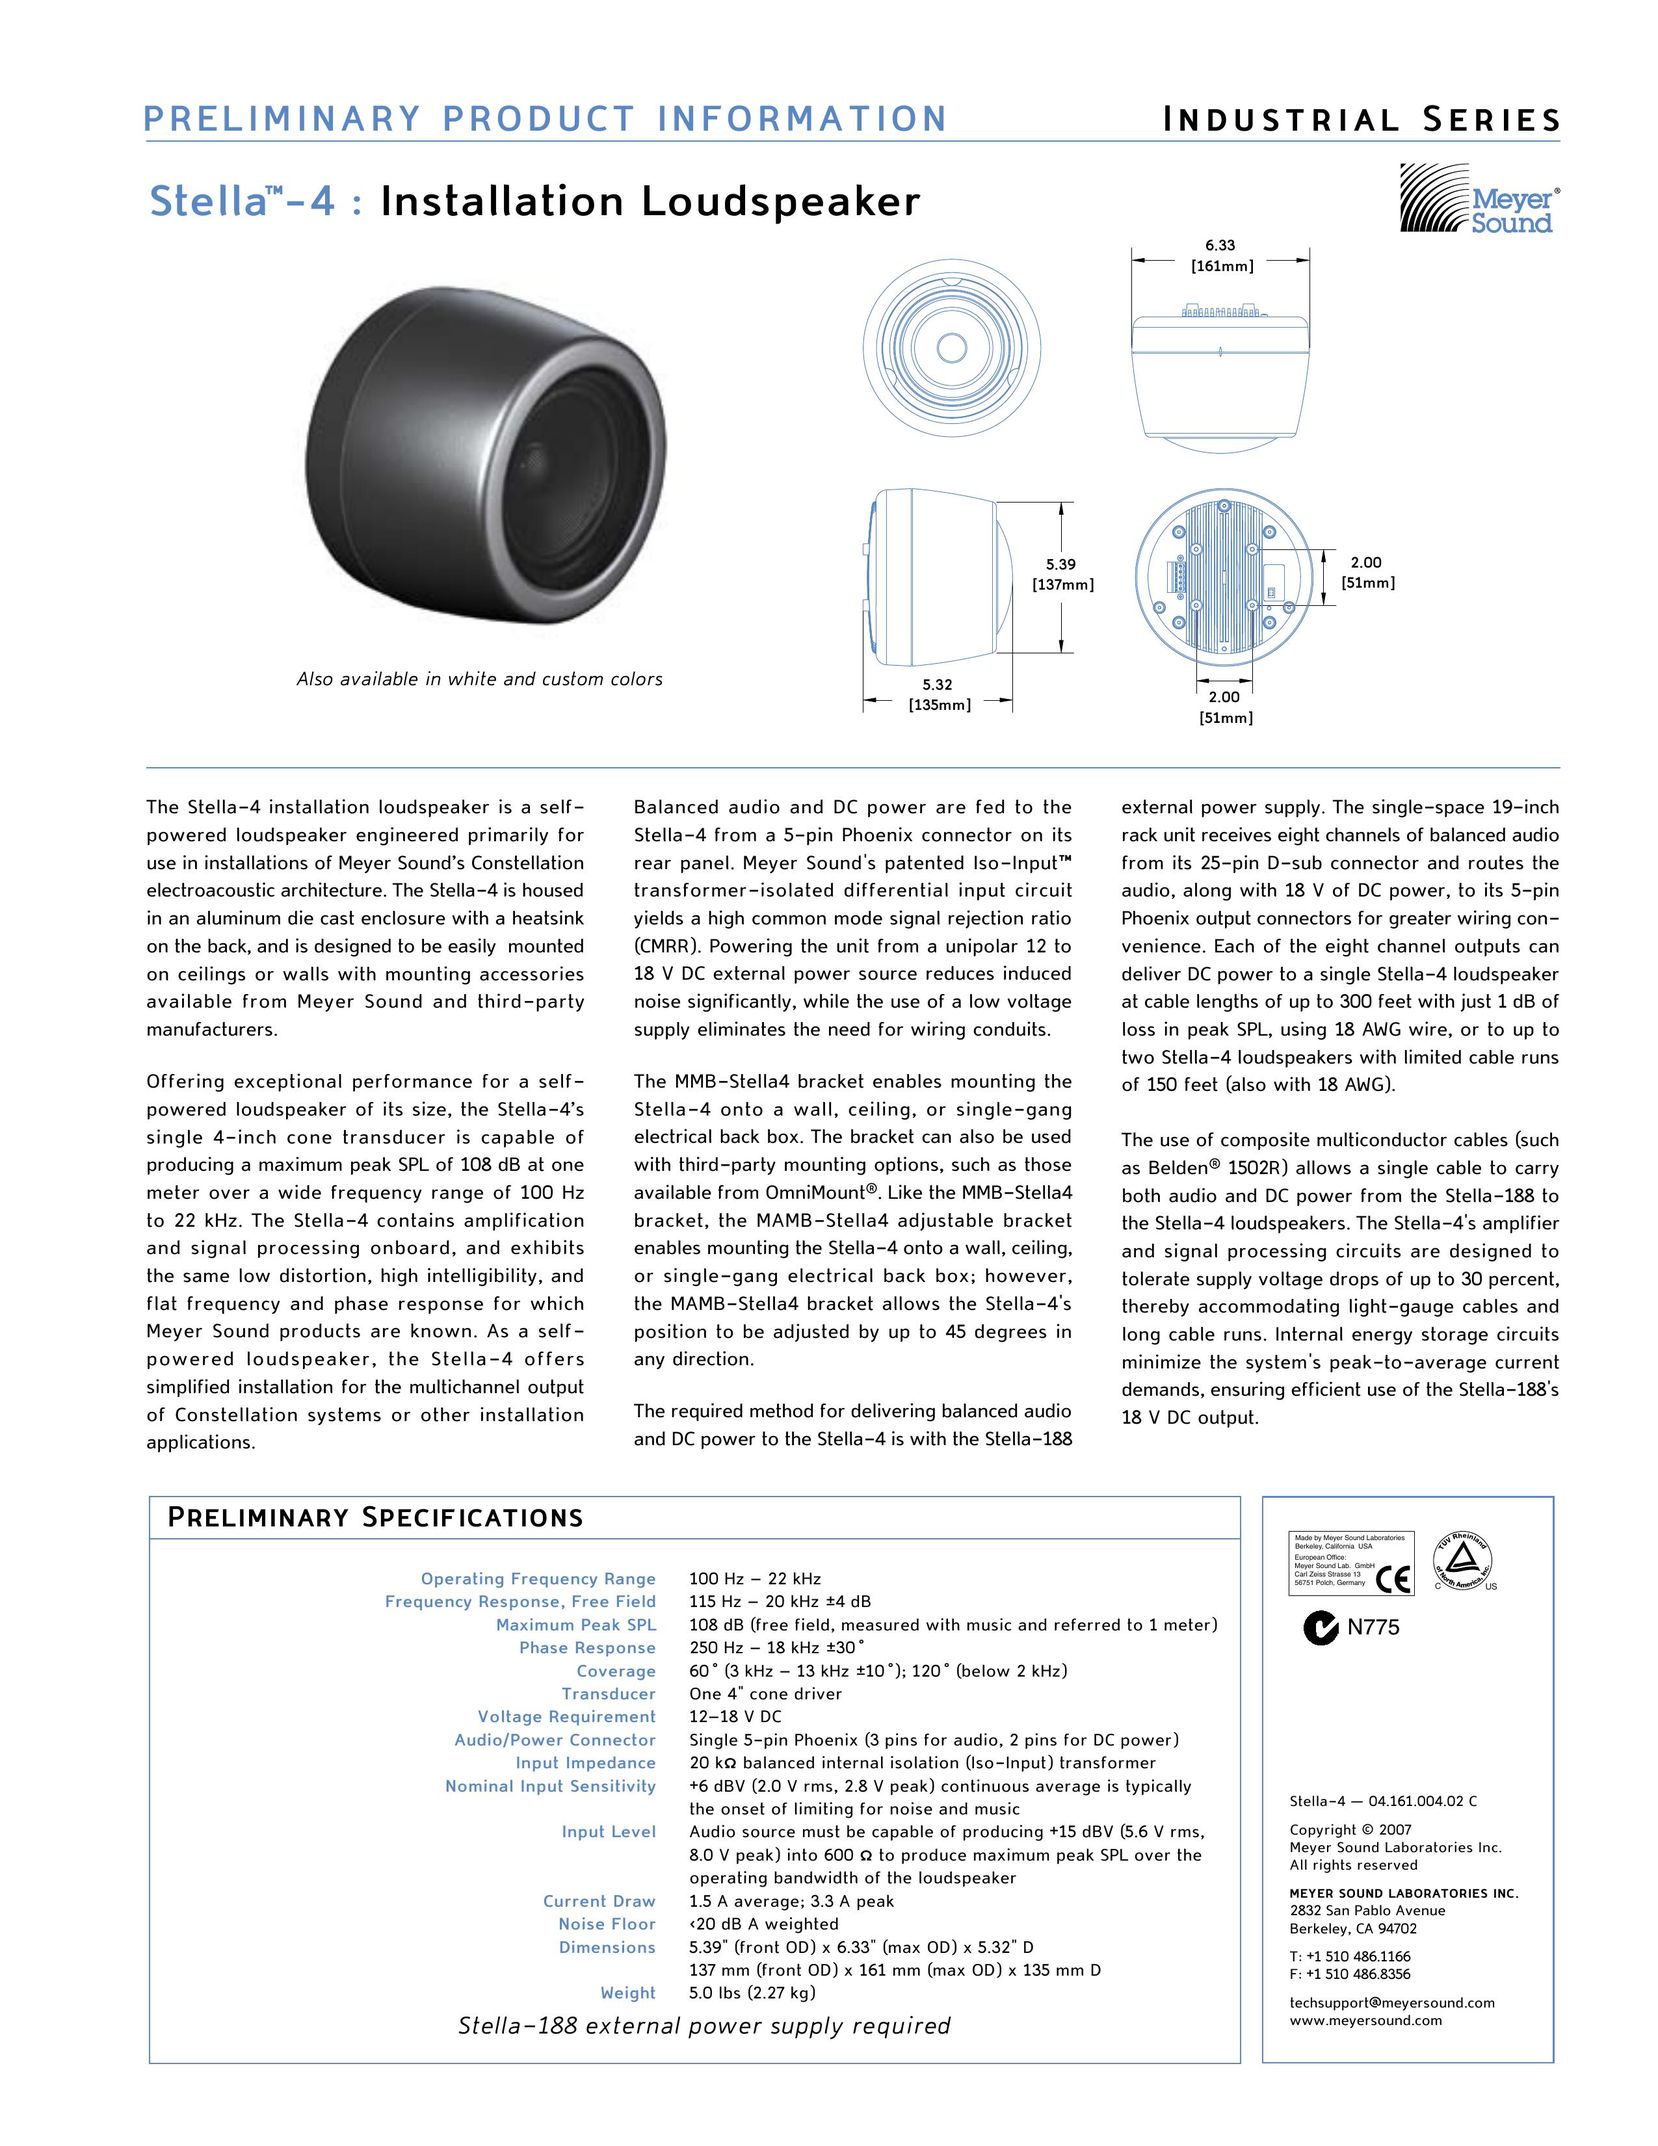 Meyer Sound Stella-4 Portable Speaker User Manual